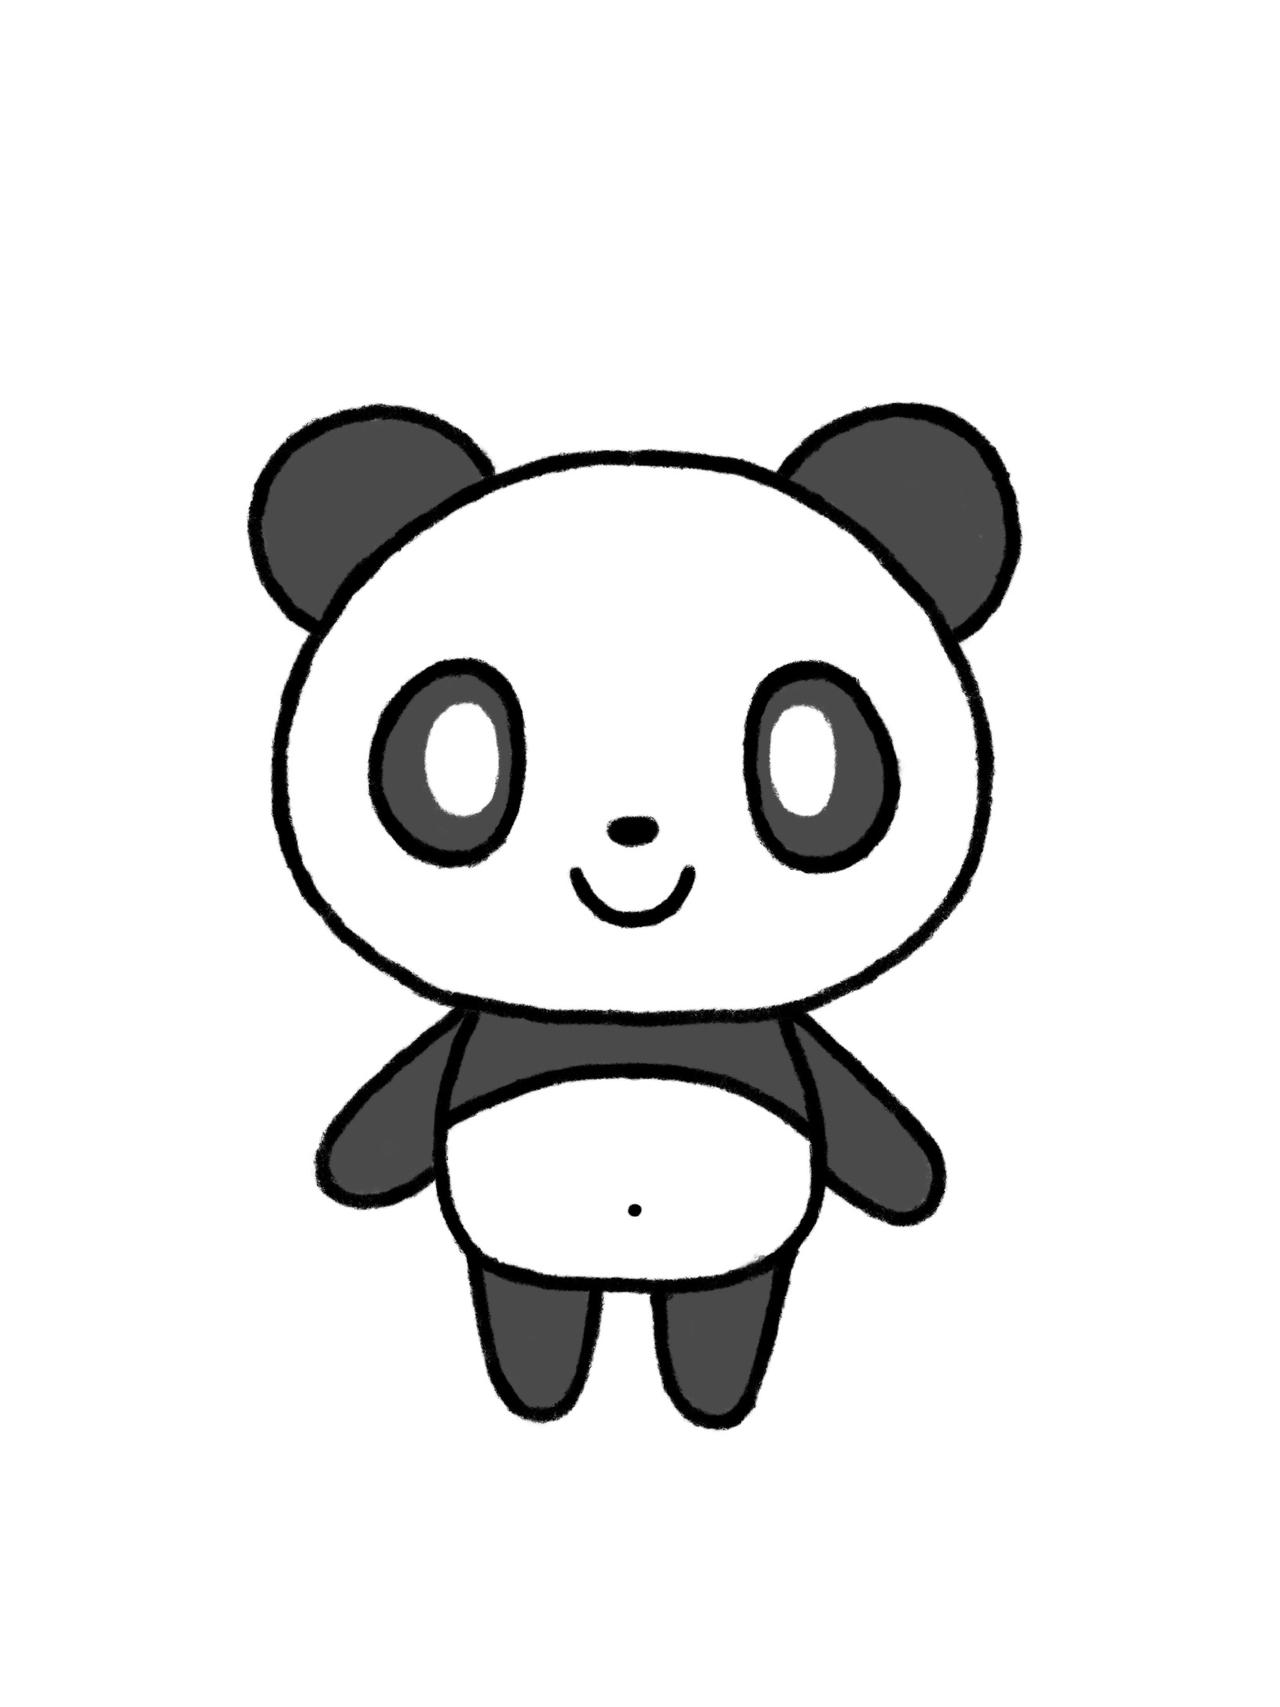 Sanrio Characters by Panda0-0 on DeviantArt